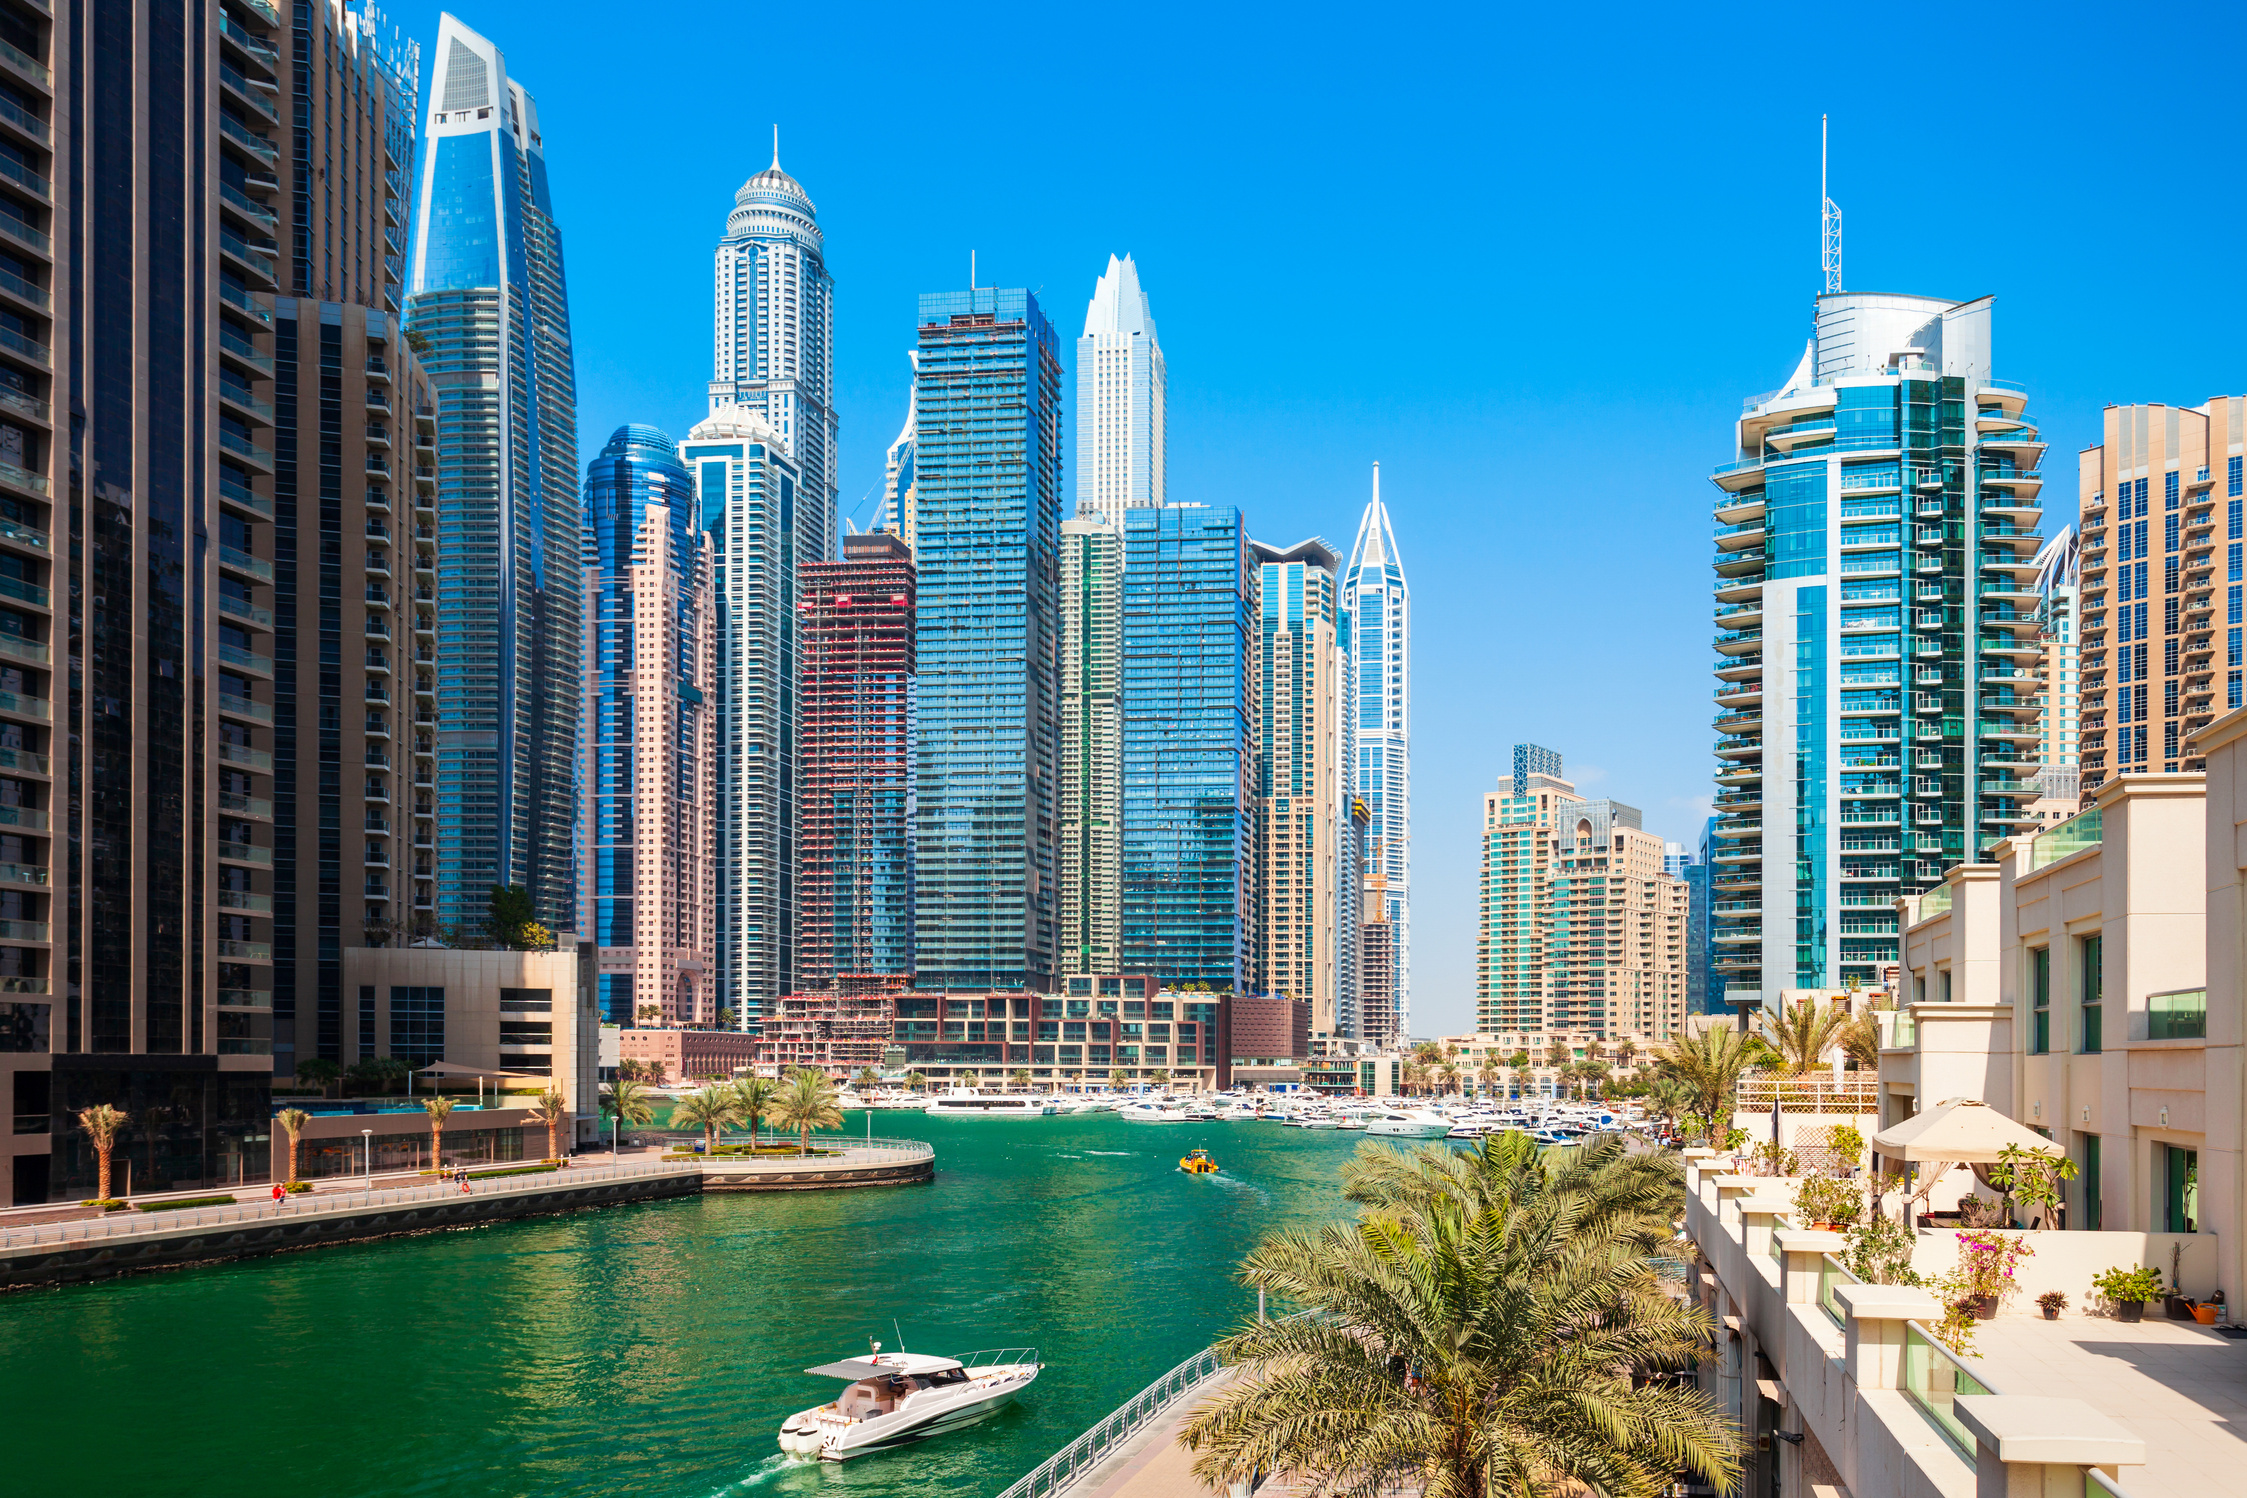 Dubai Marina District in Dubai, UAE